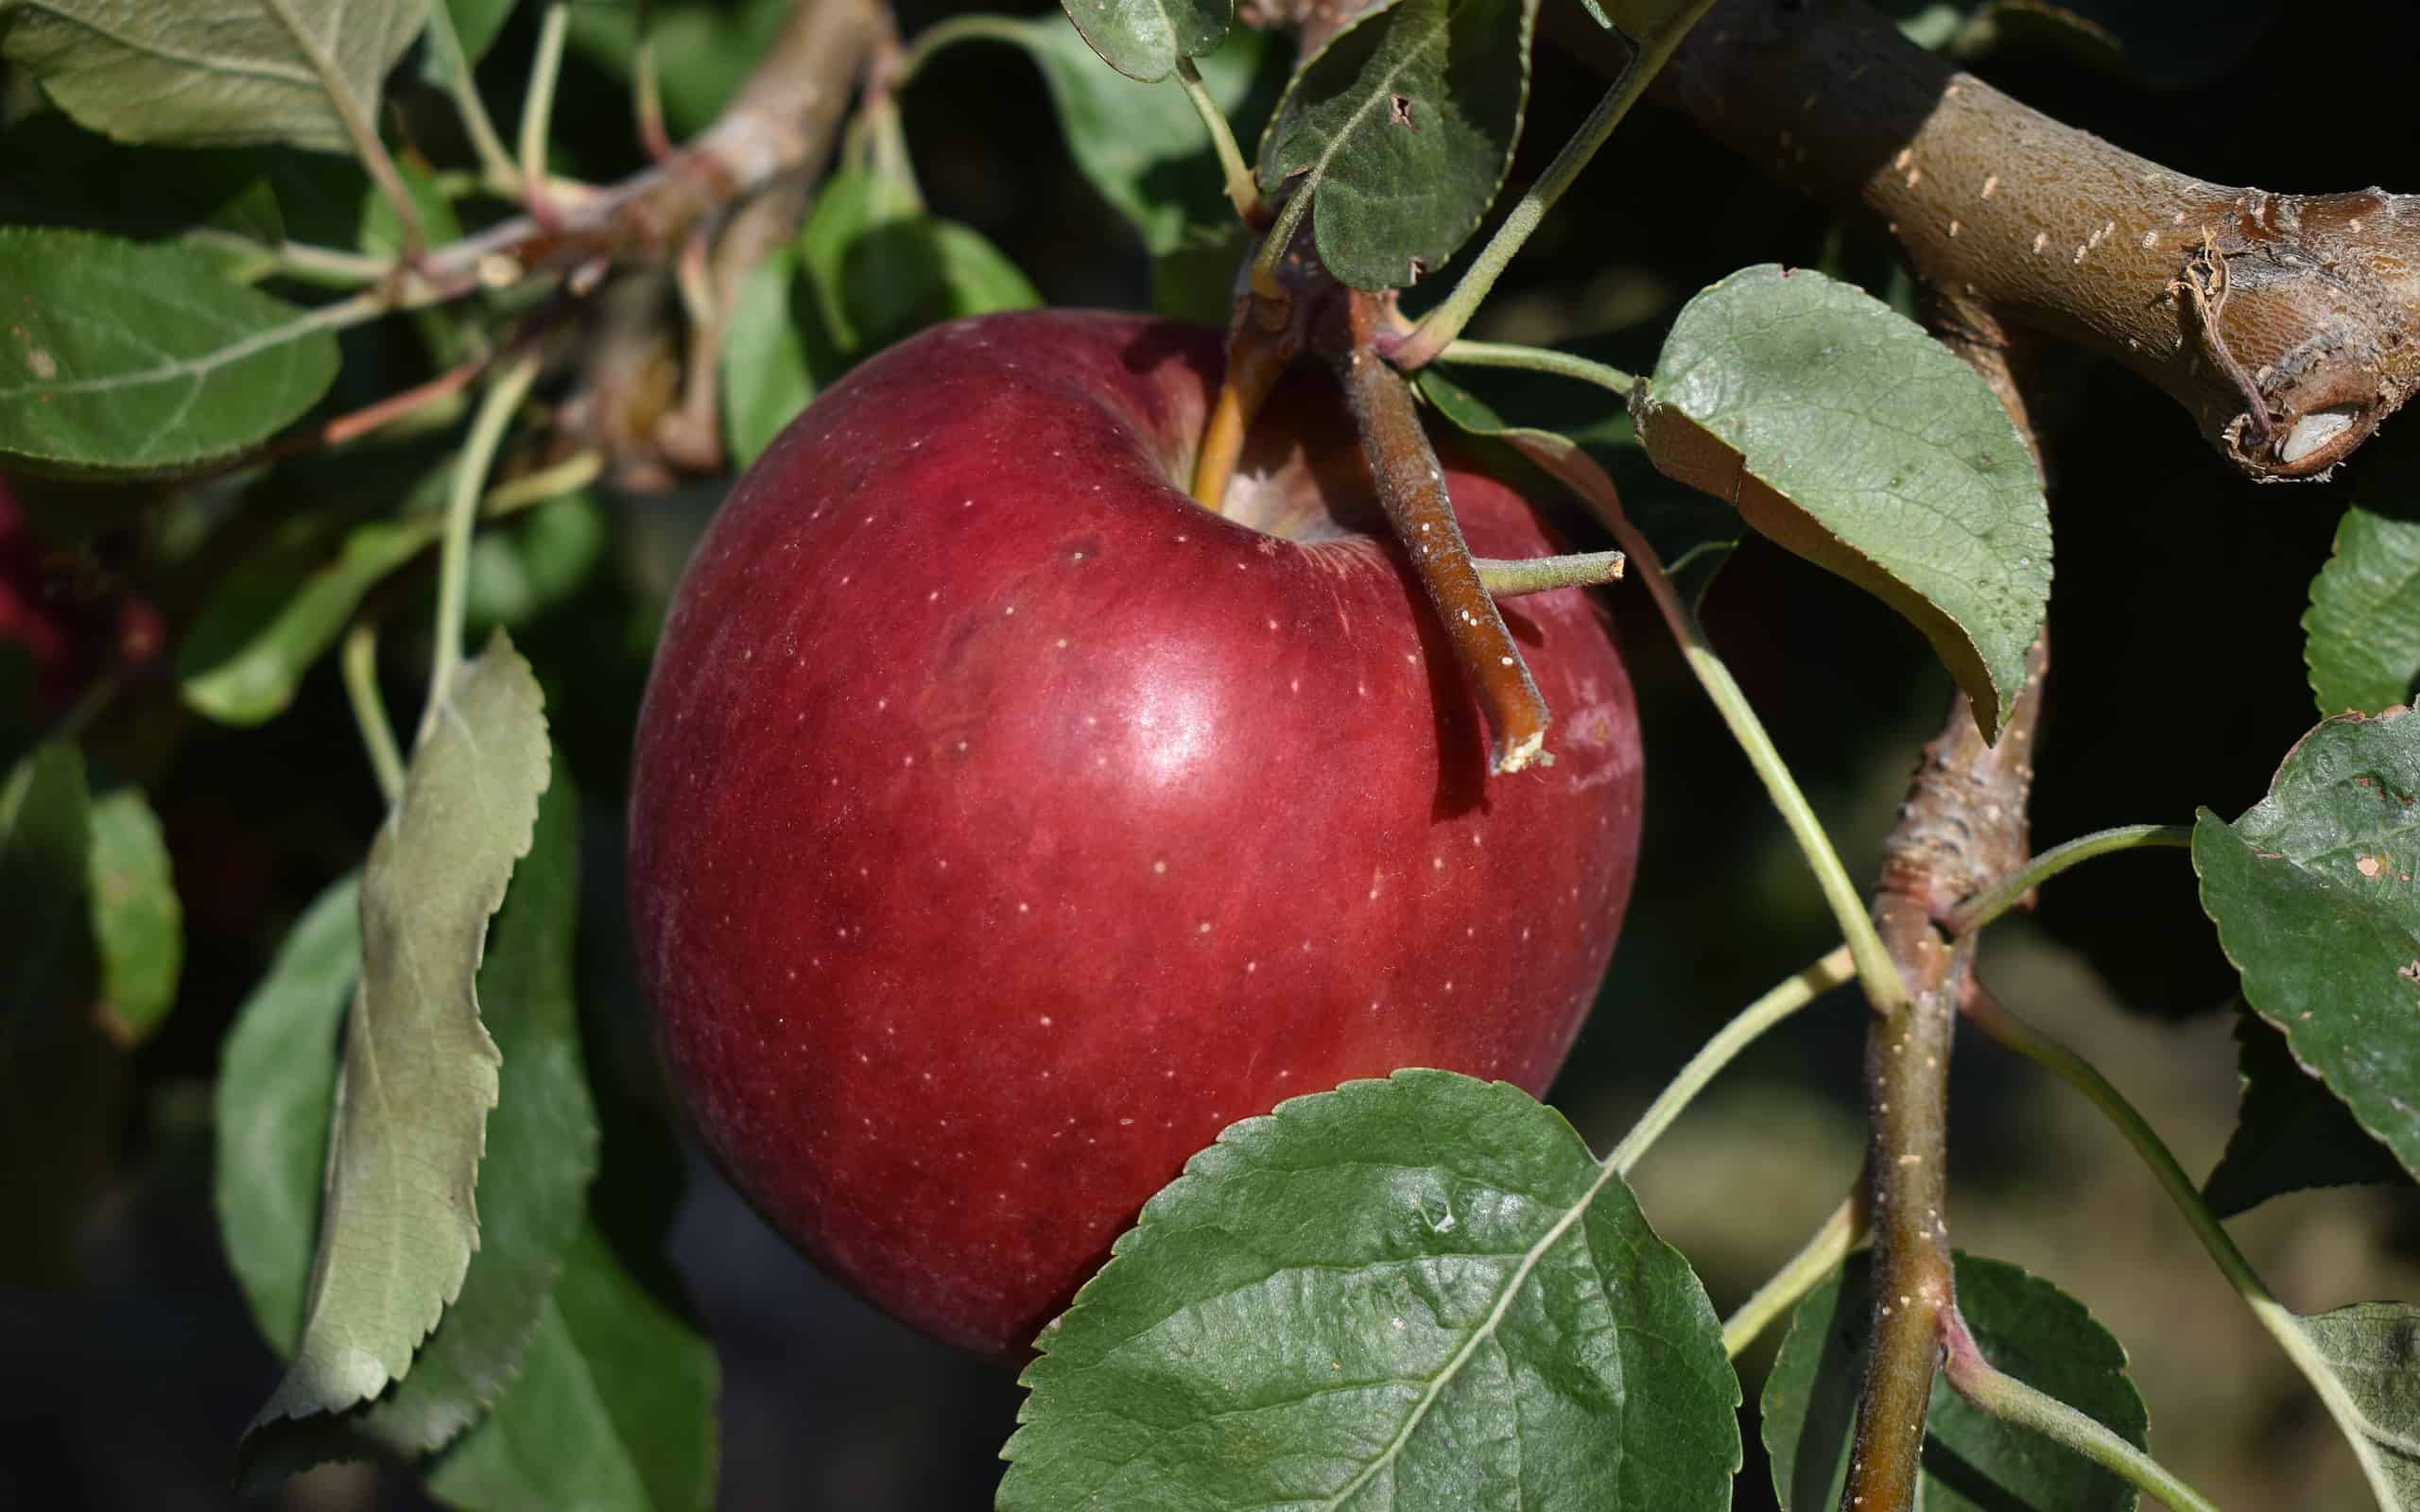 A red, ripe "WA 38" apple